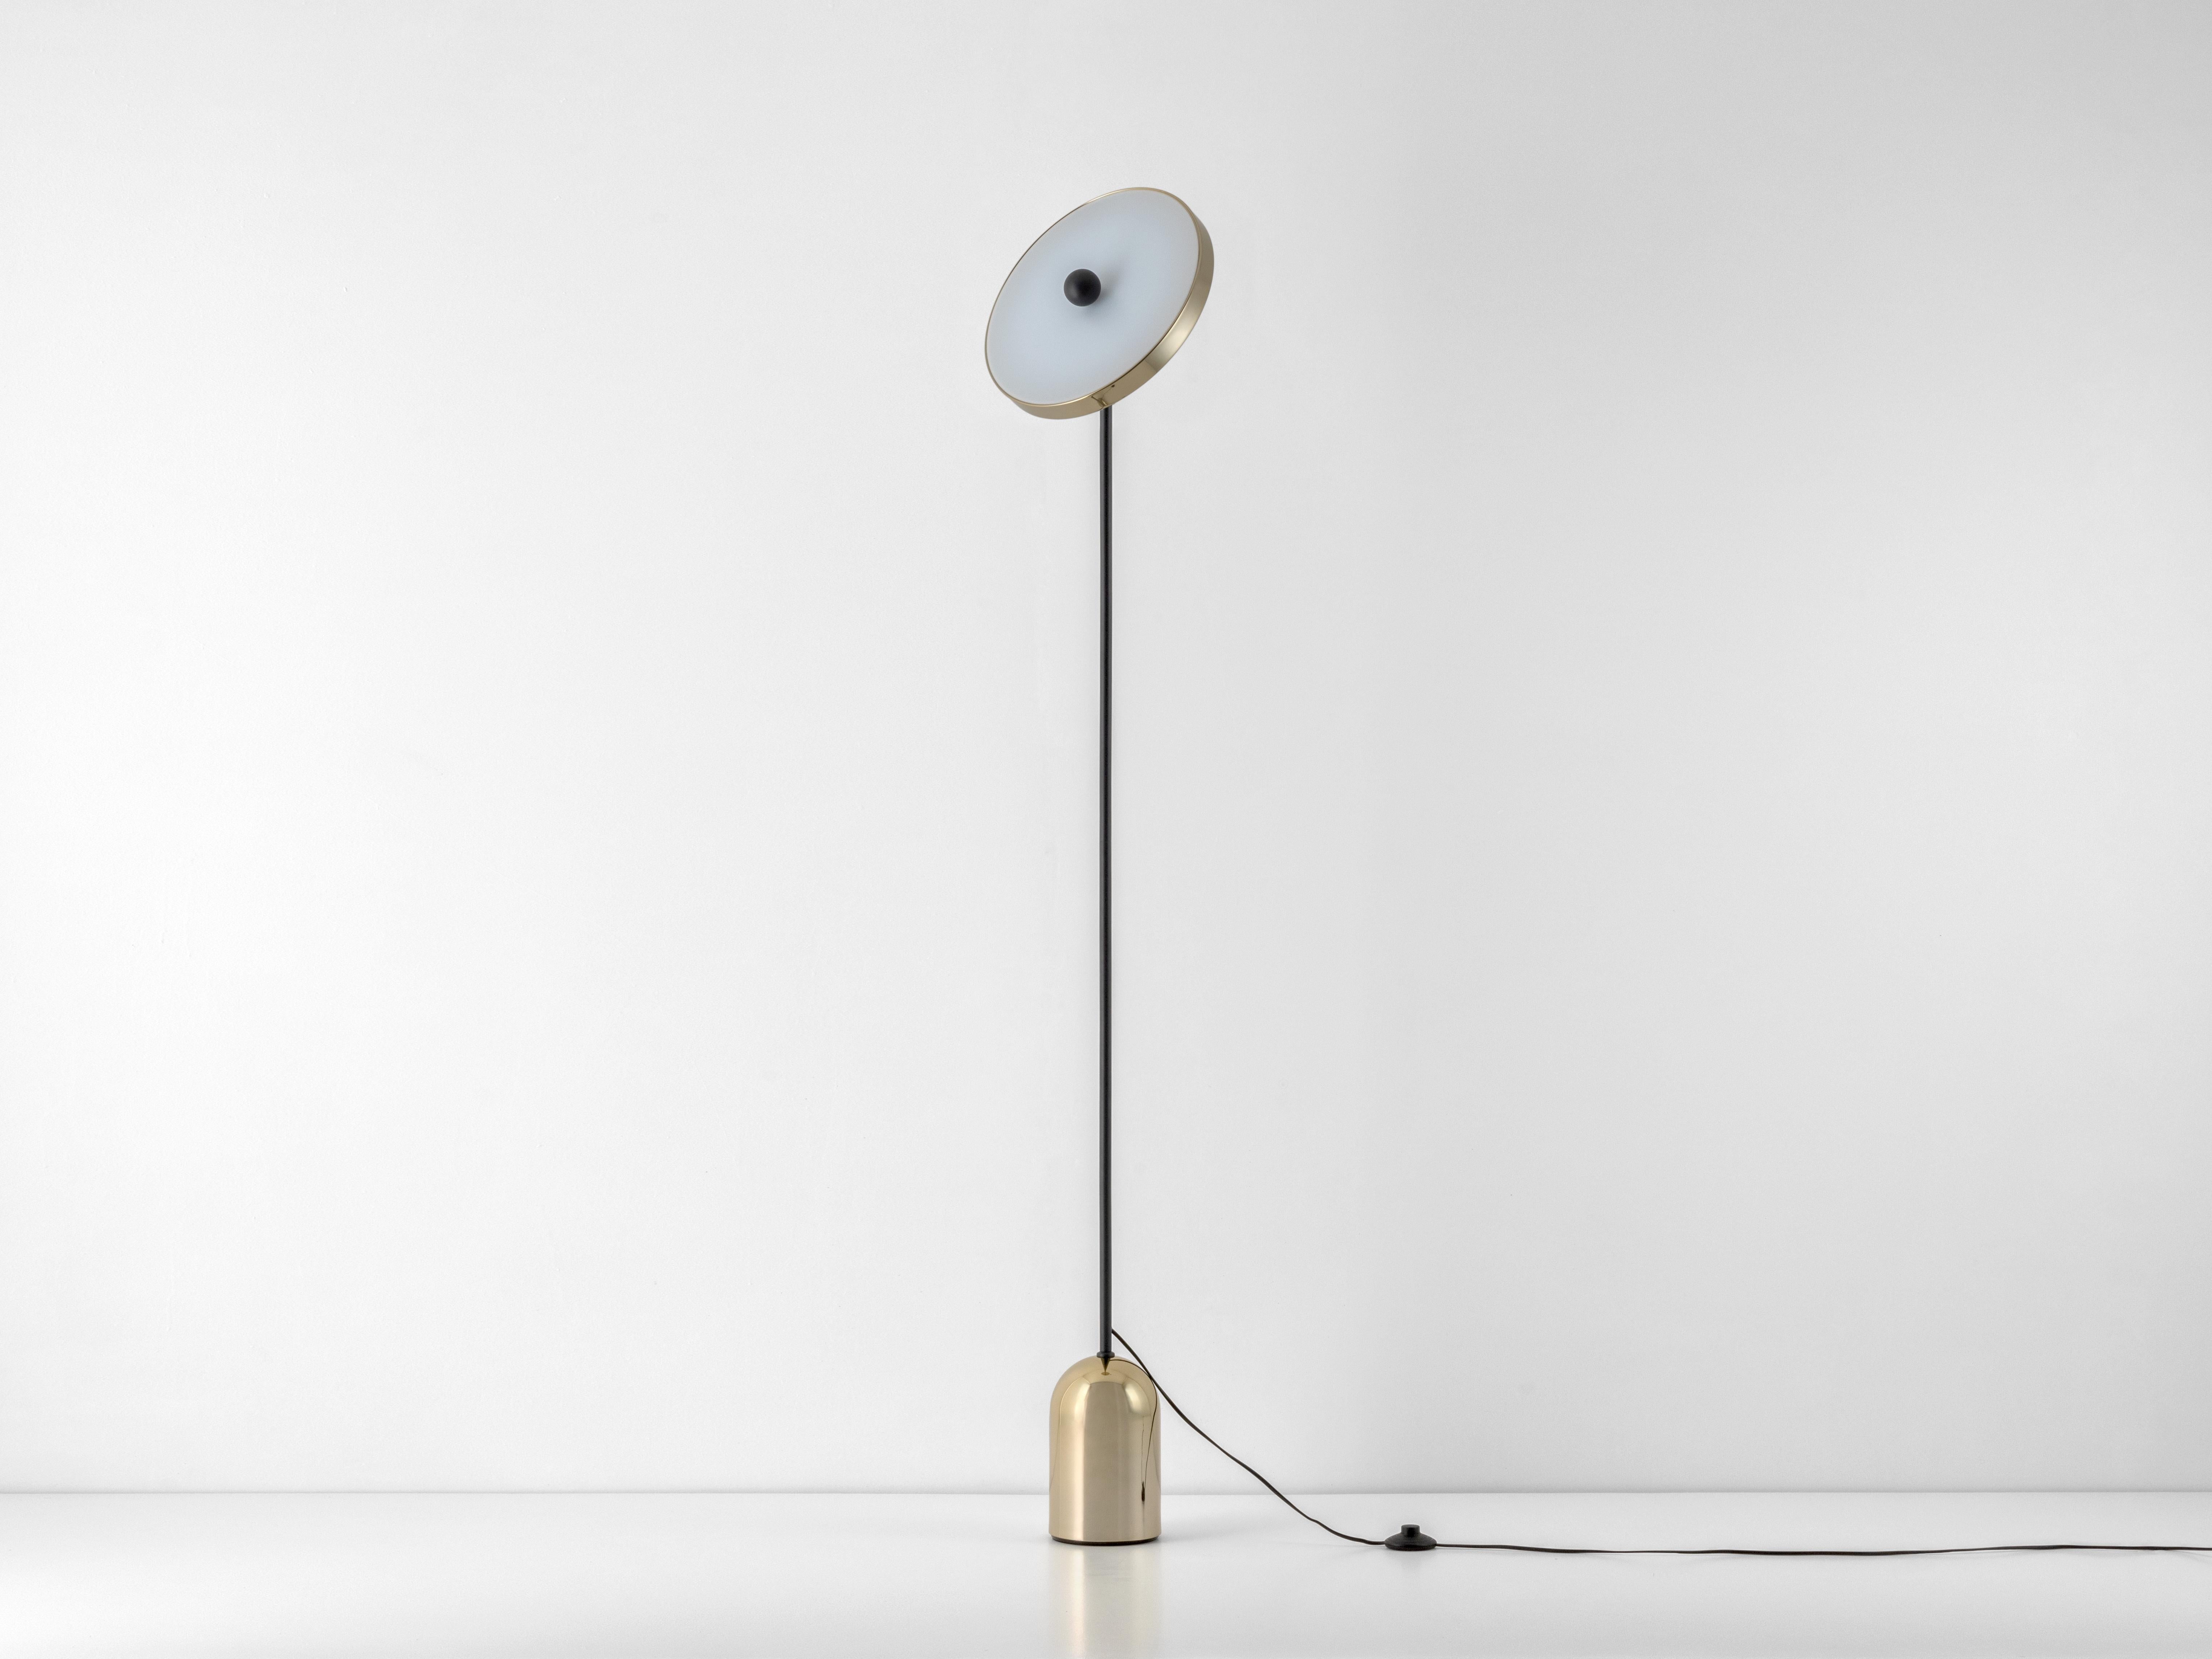 Chinese Houseof Brass Uplighter Floor Lamp For Sale